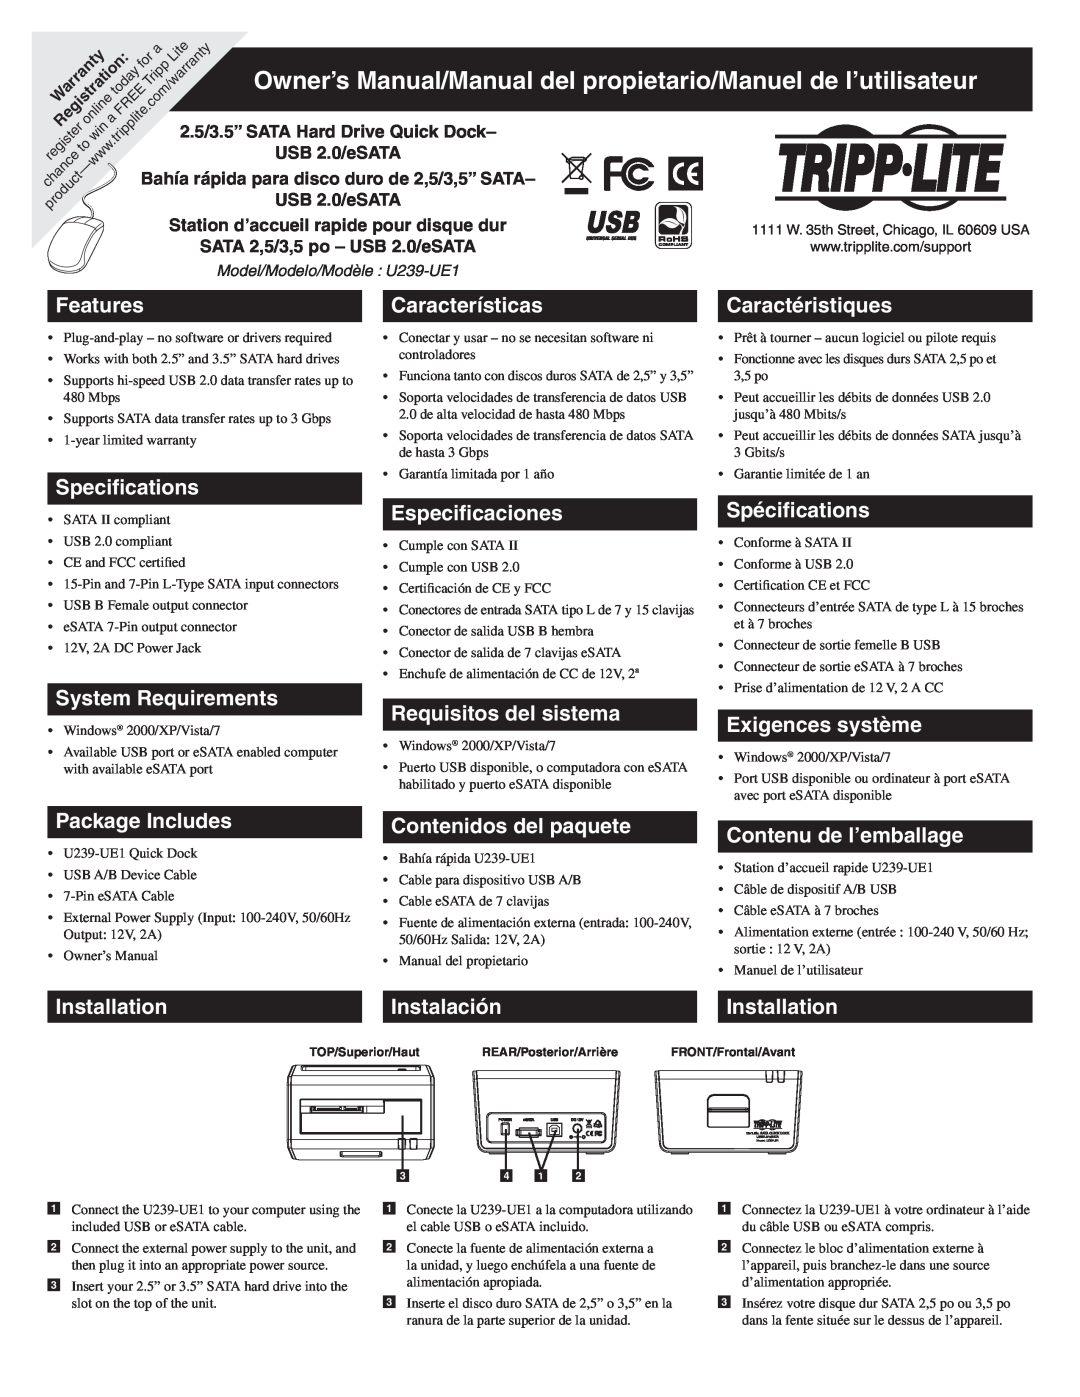 Tripp Lite U239-UE1 owner manual Owner’s Manual, Hard Drive Quick Dock, USB 2.0 / eSATA to SATA, Features, Installation 